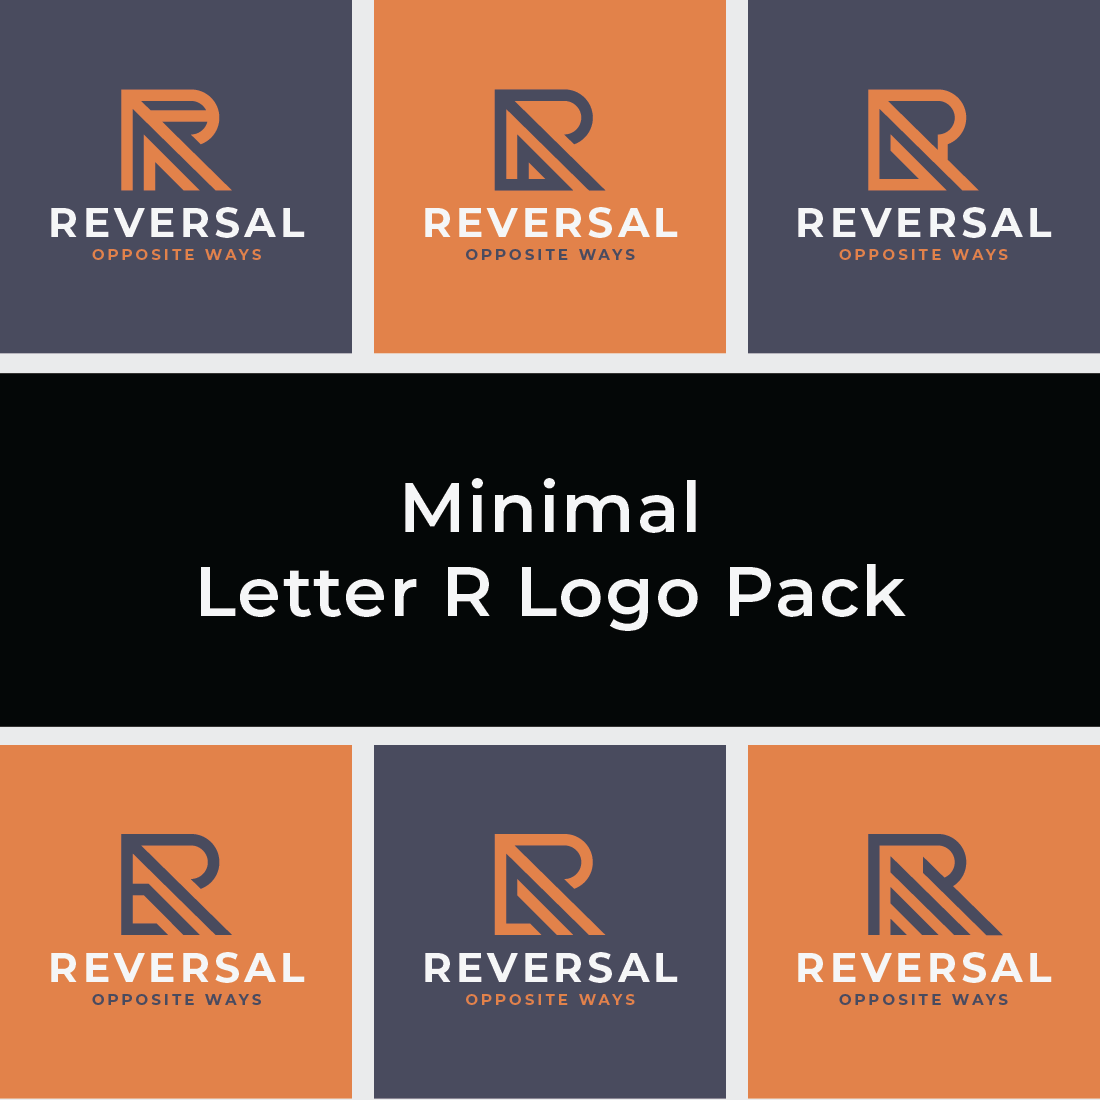 Minimal Letter R Logo Pack preview image.